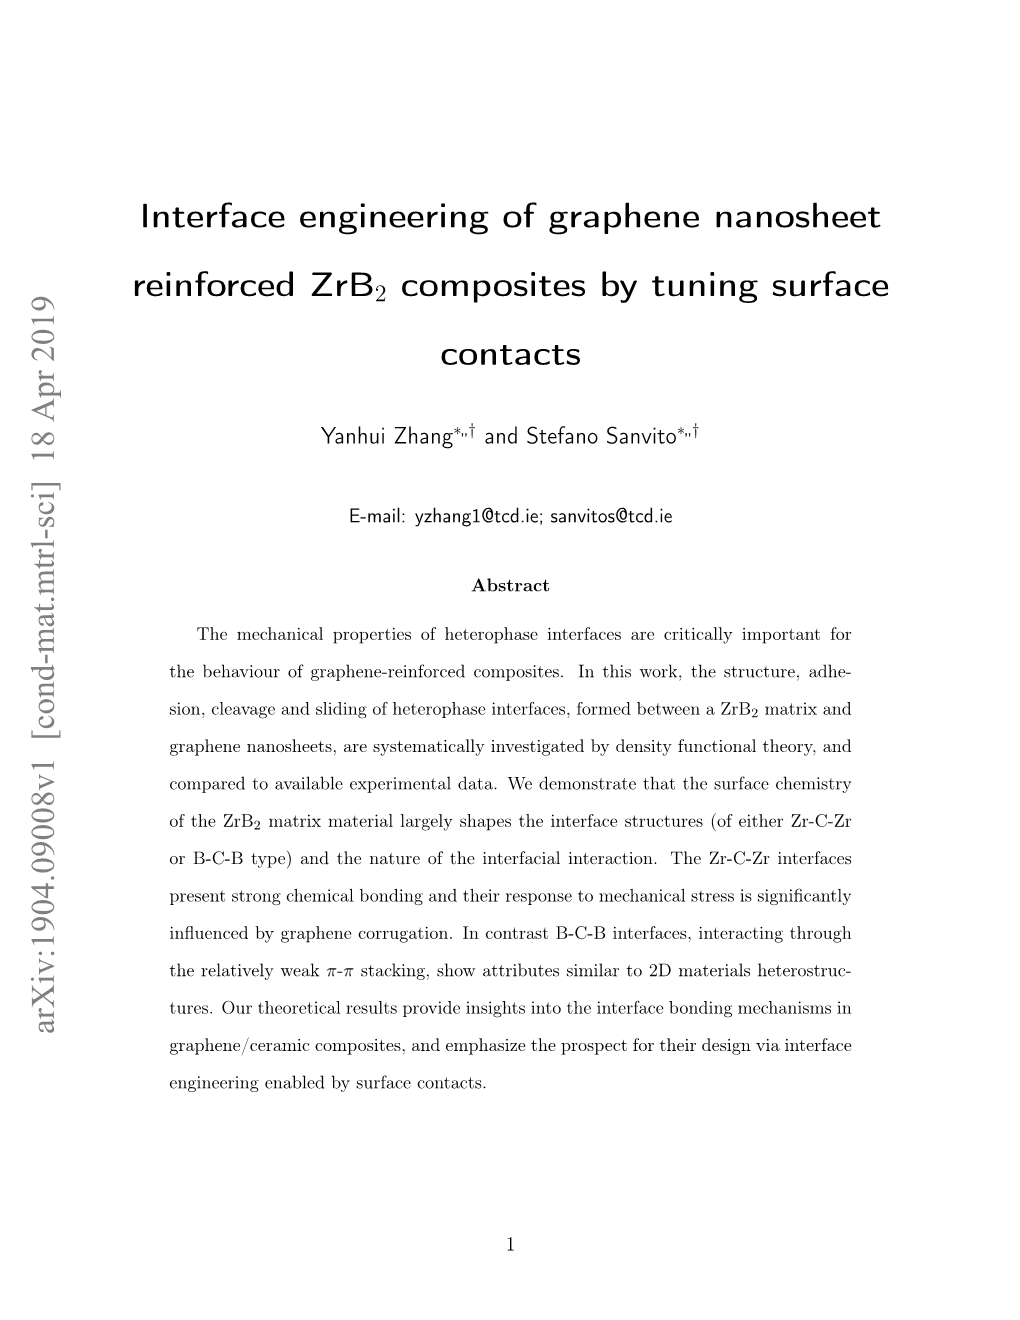 Interface Engineering of Graphene Nanosheet Reinforced Zrb2